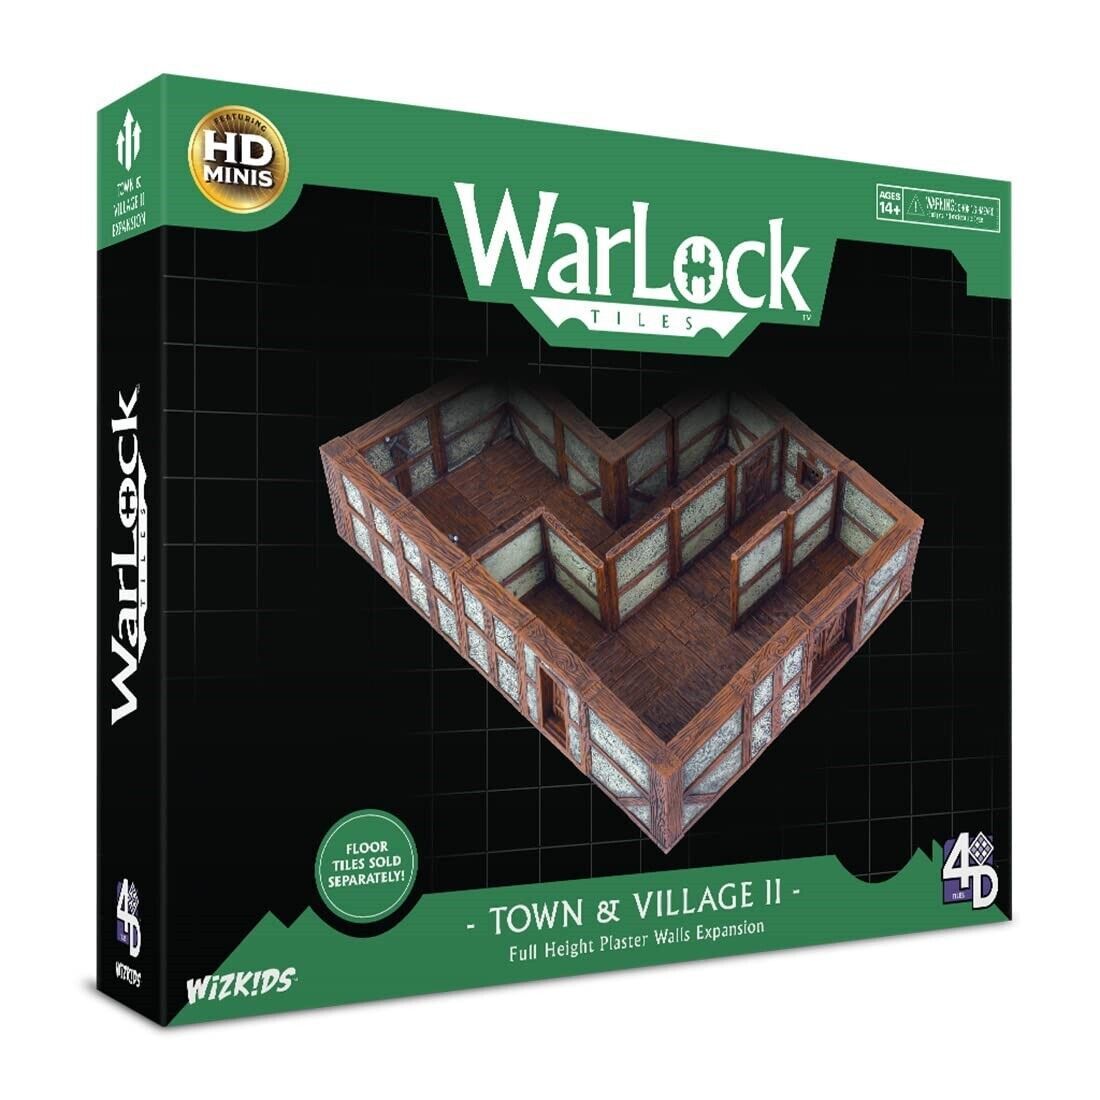 WarLock Tiles: Town & Village II - Full Height Plaster Walls Expansion - $73.47